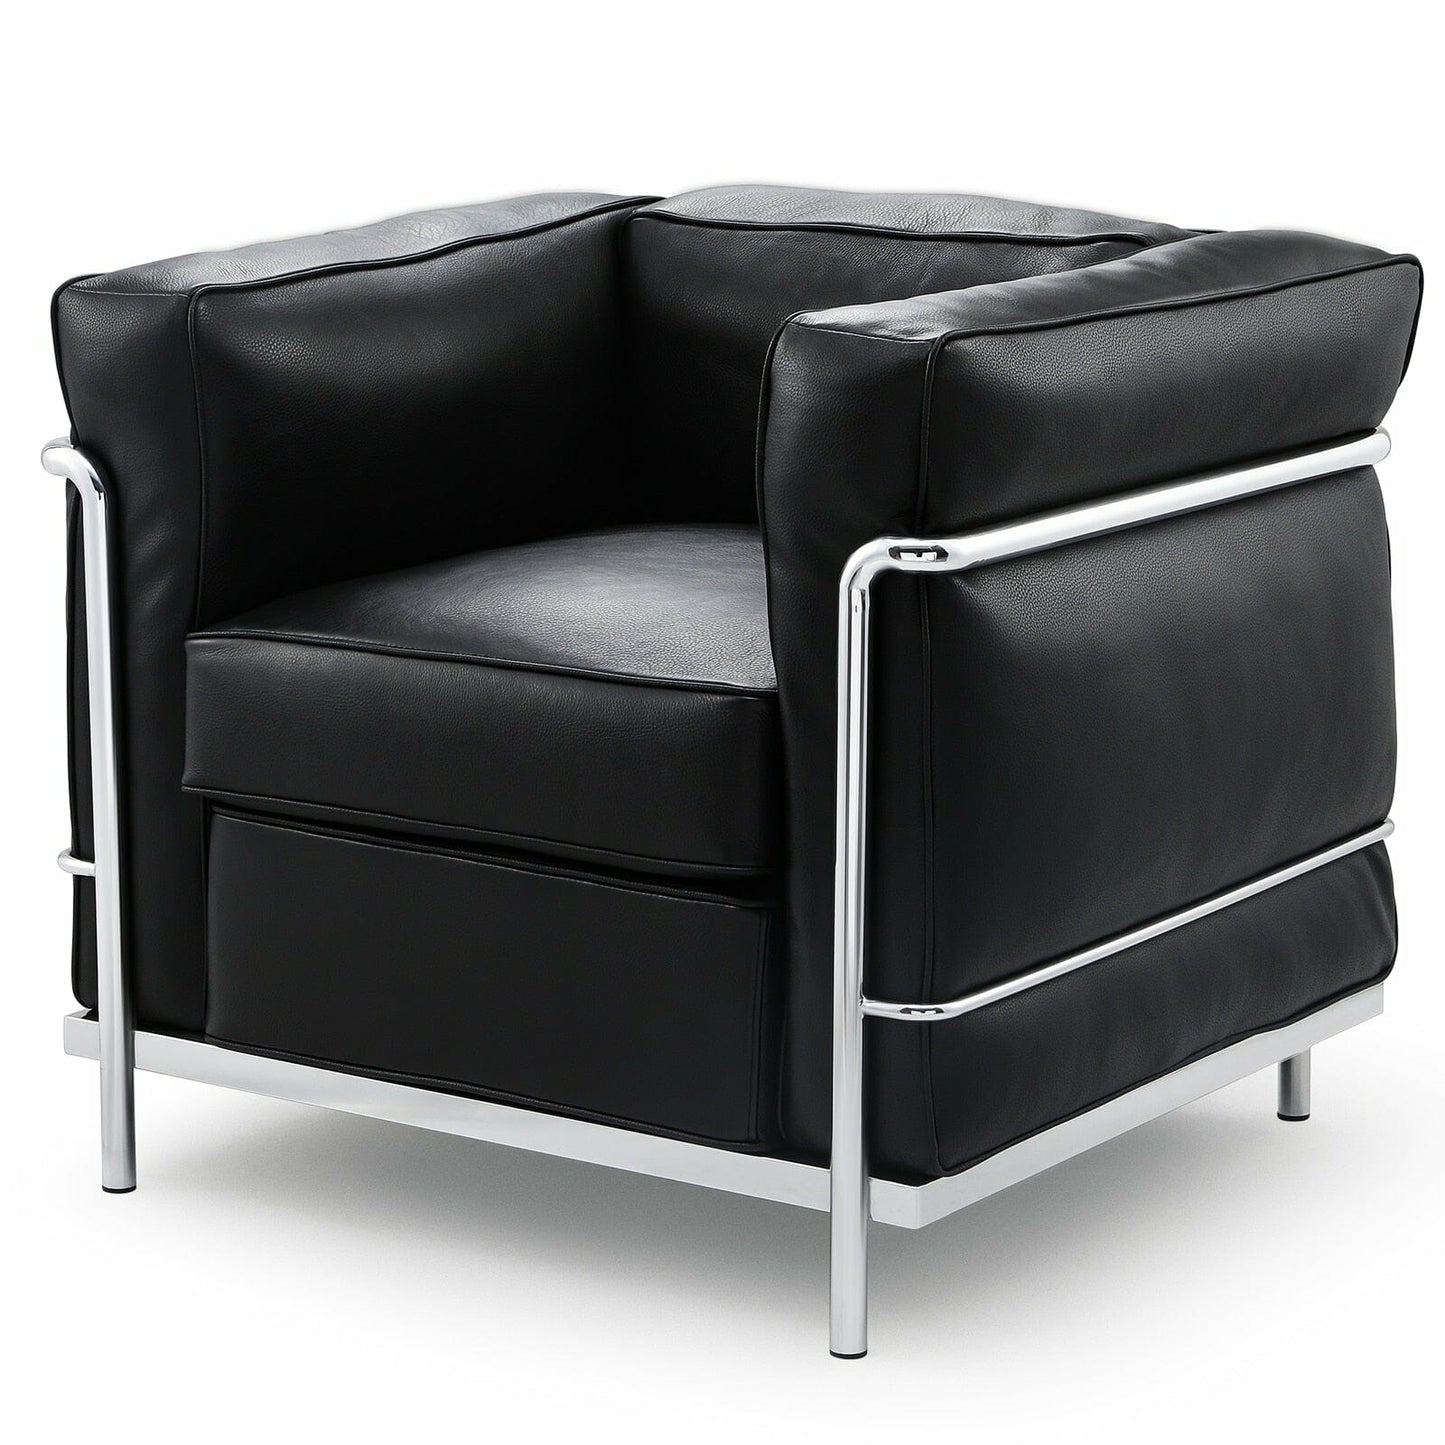 Luxuriance Designs - LC2 Sofa Replica by Le Corbusier | Genuine Italian Leather - Review